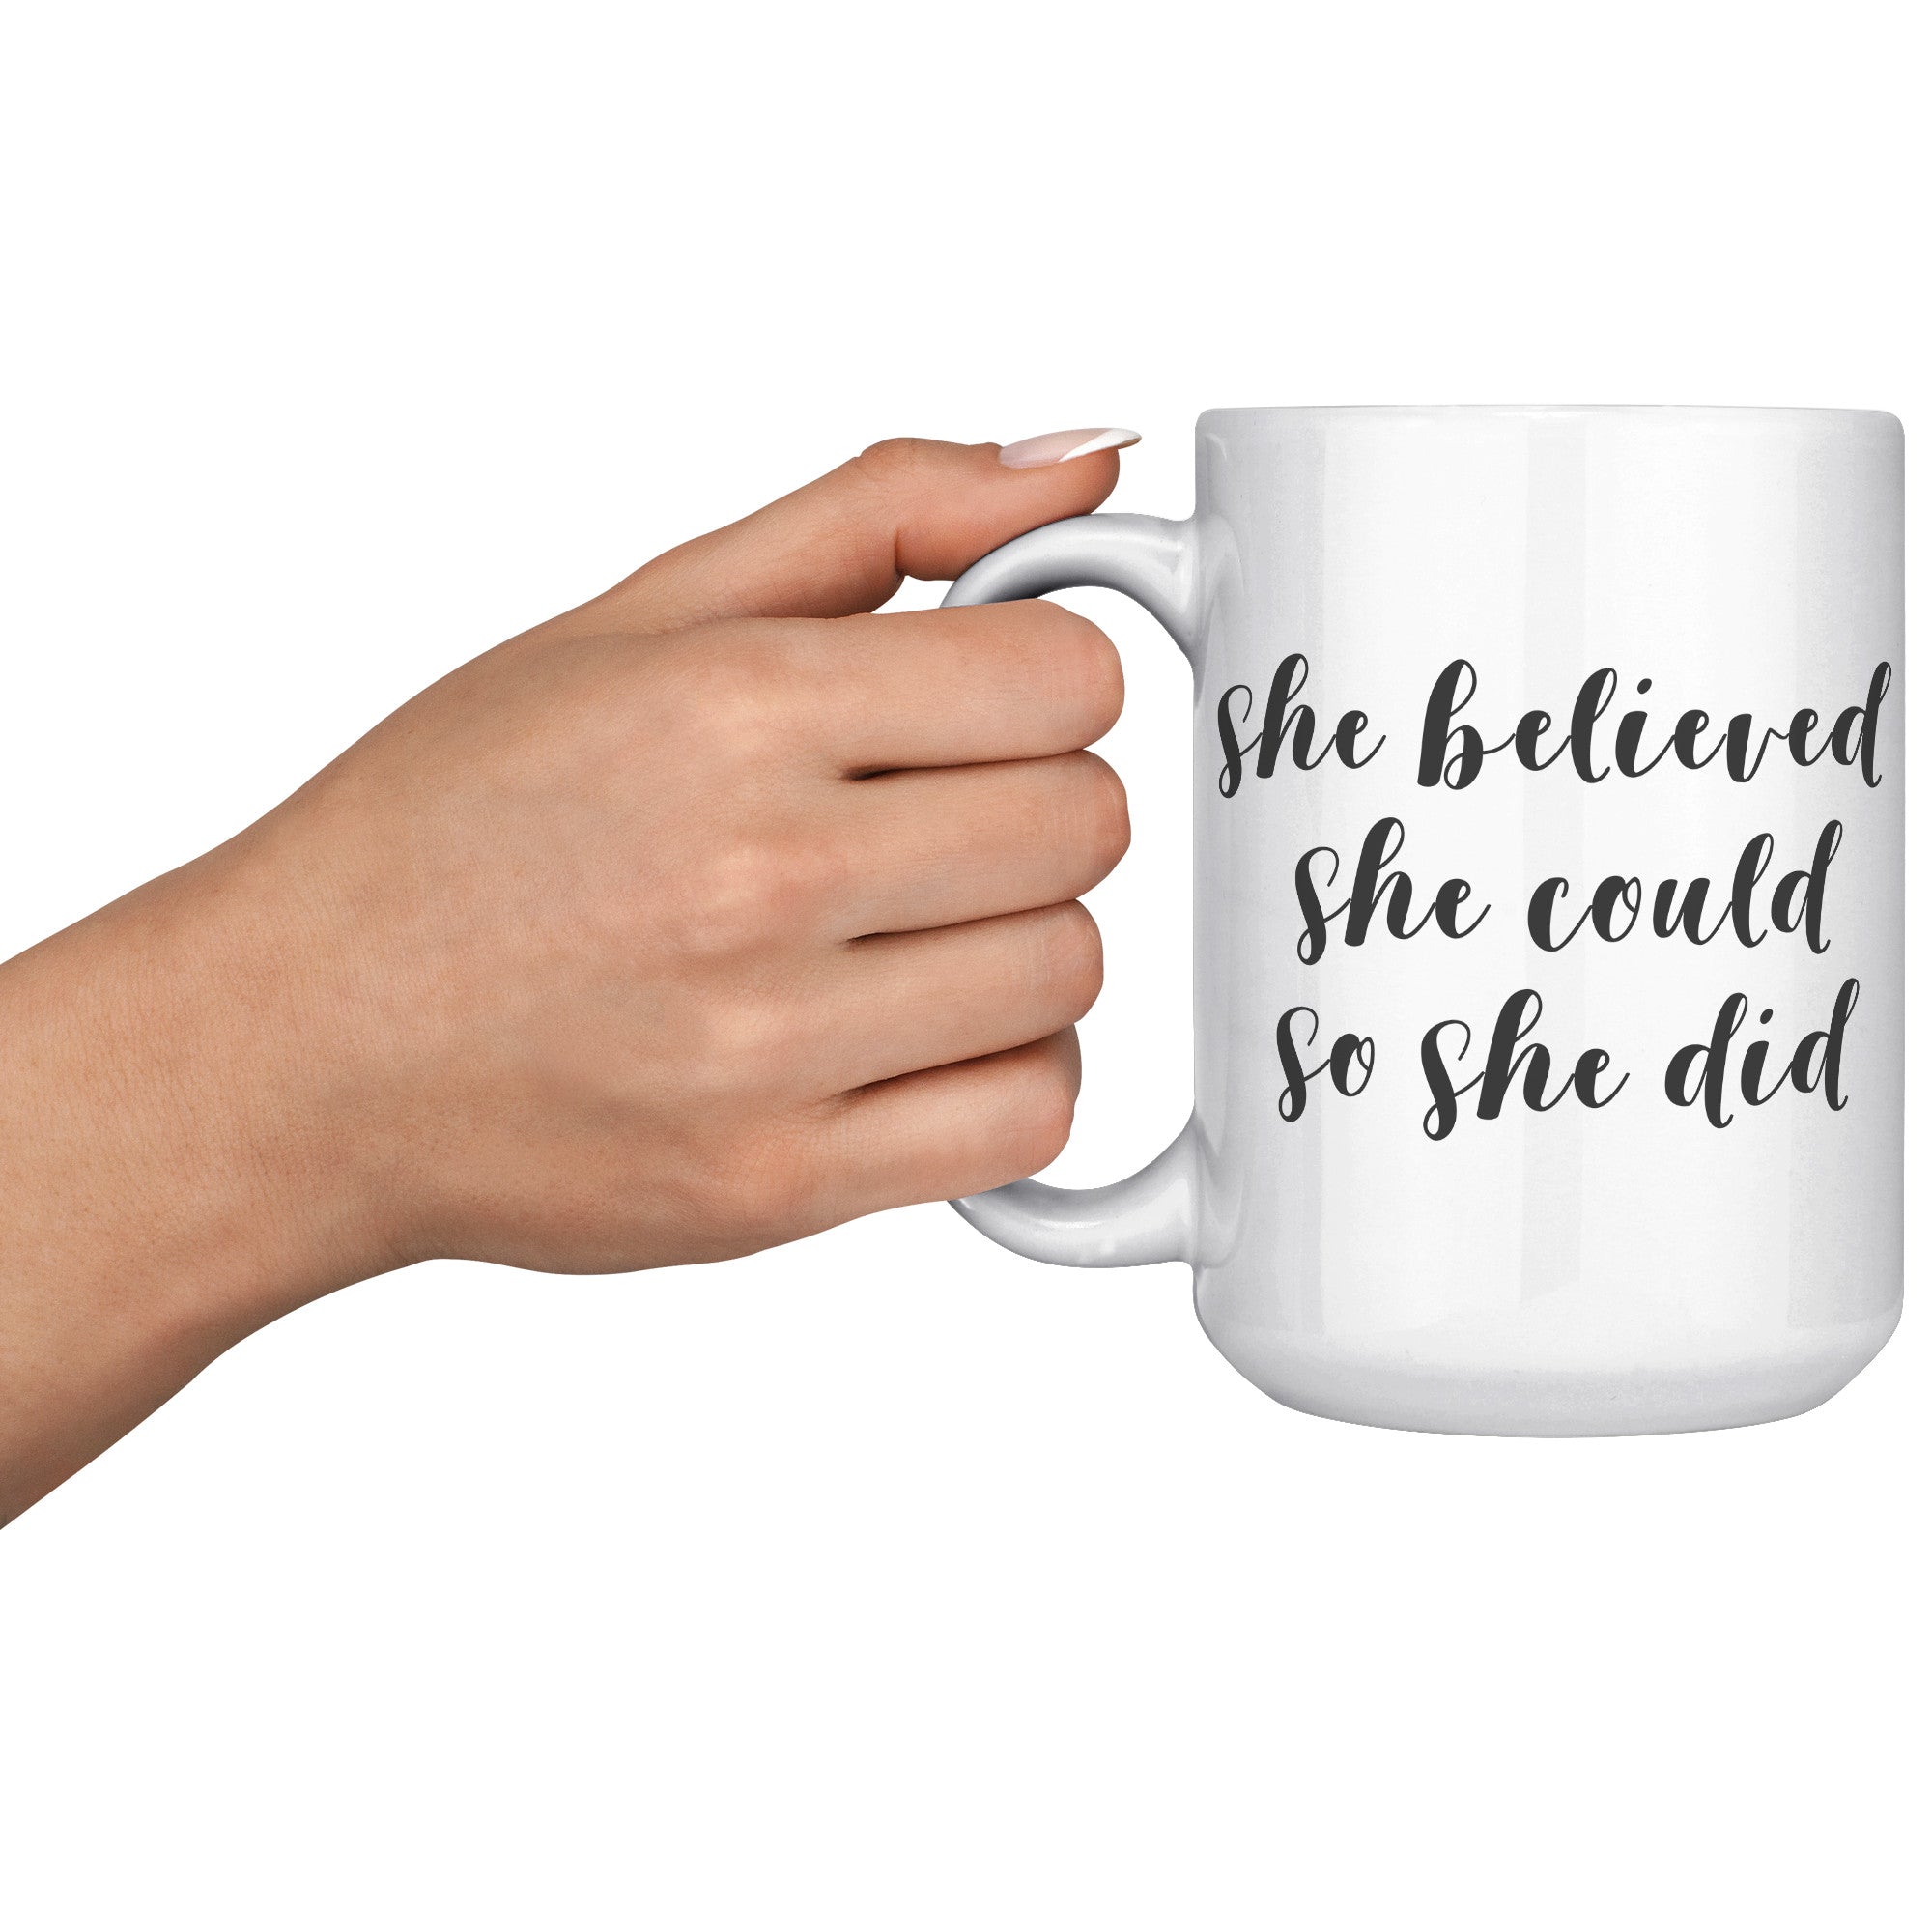 Female Runner Coffee Mug - Inspirational Running Quotes Cup - Perfect Gift for Women Runners - Motivational Marathoner's Morning Brew" - G1